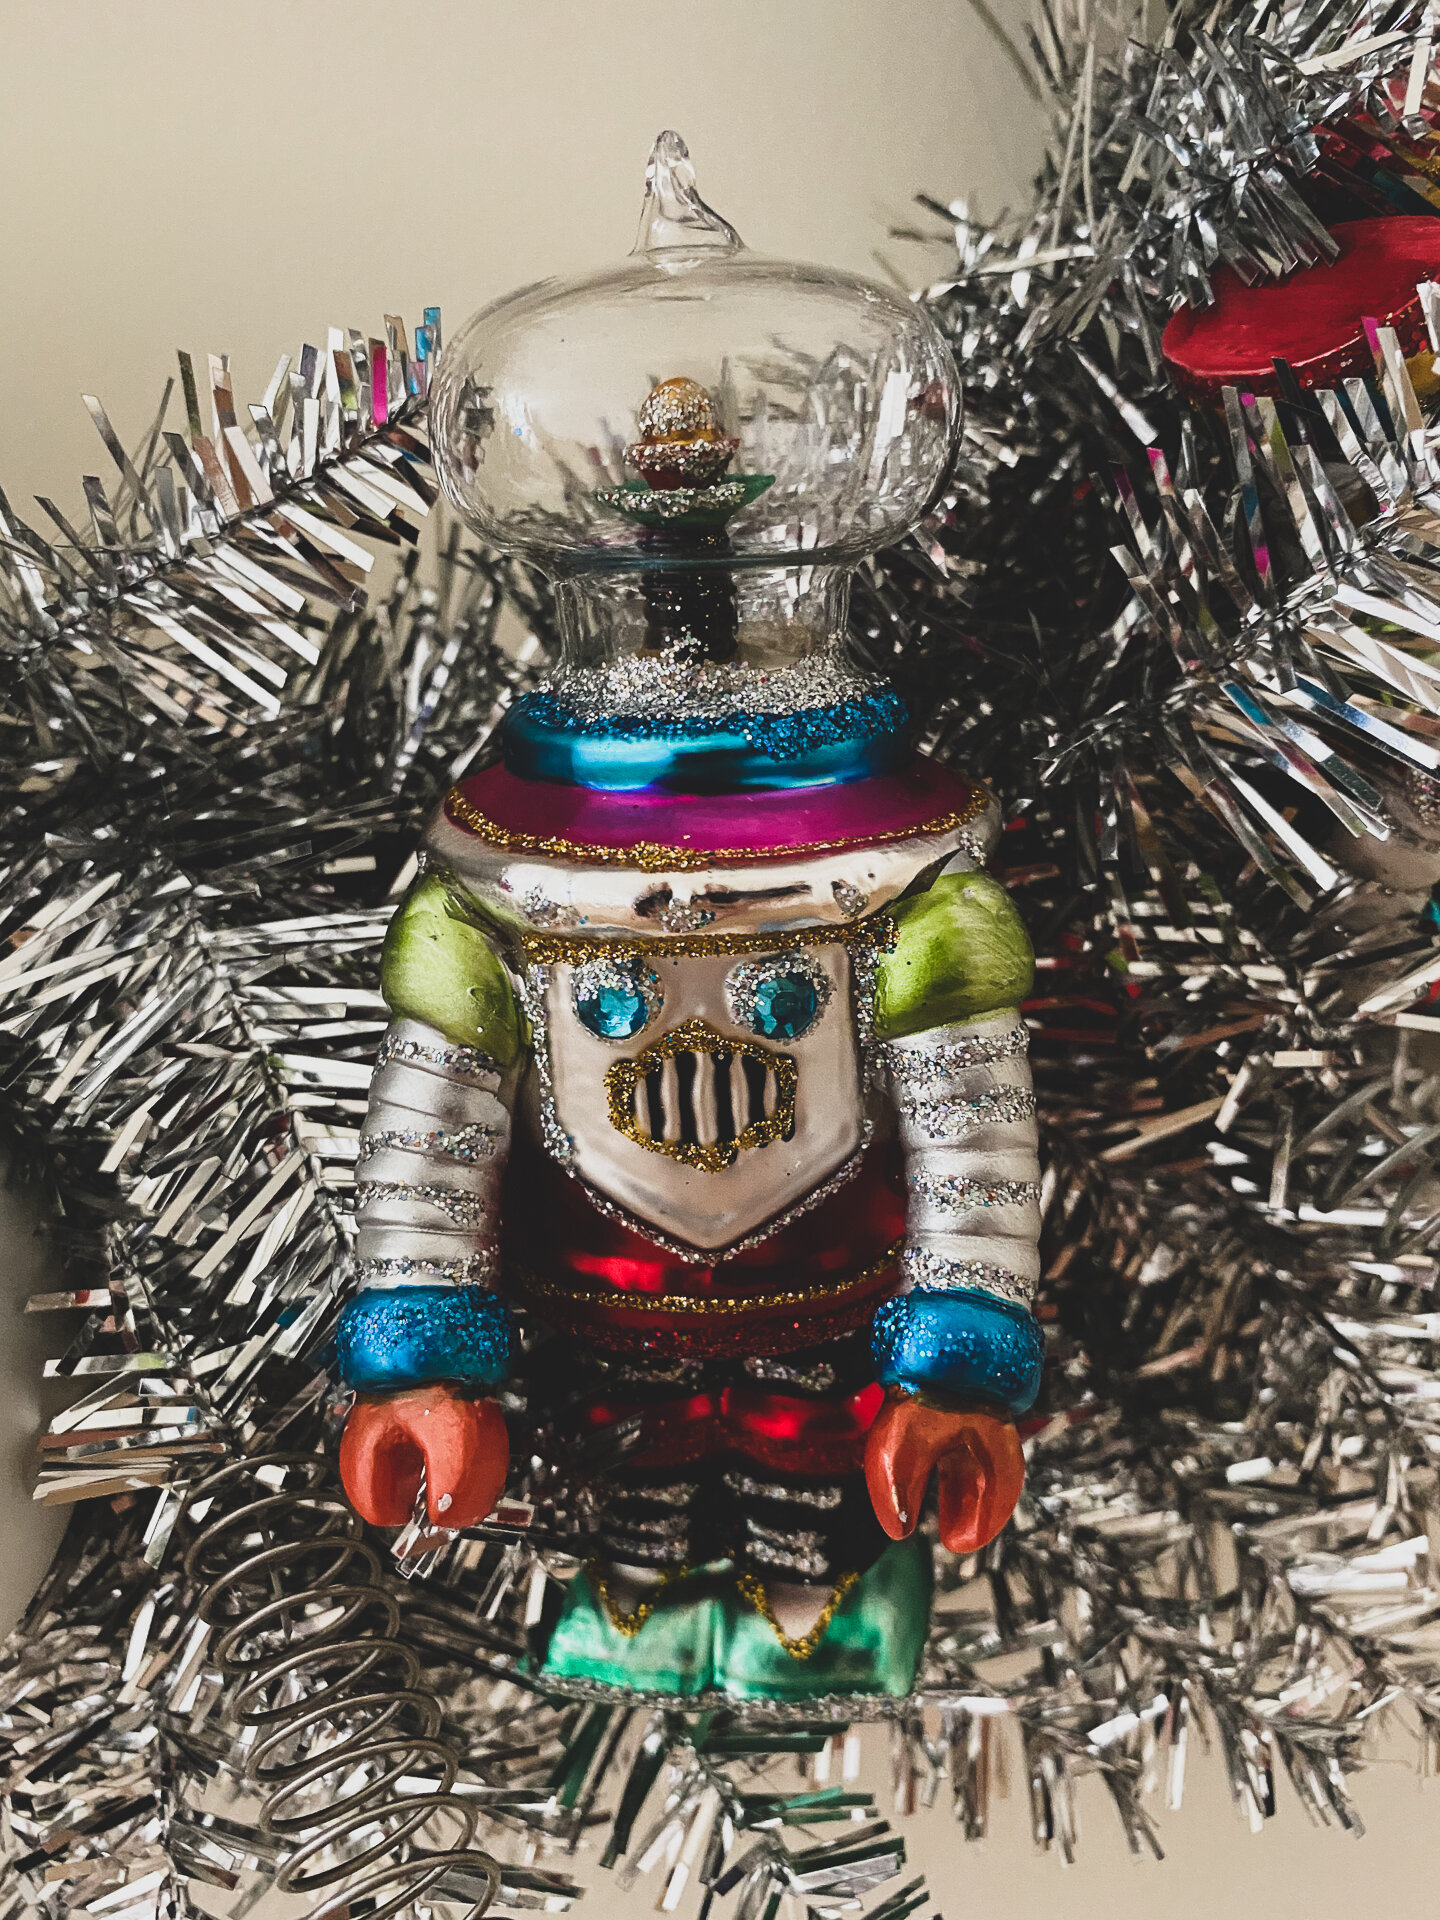 Robot Wreath by Kiriosities-10.jpg